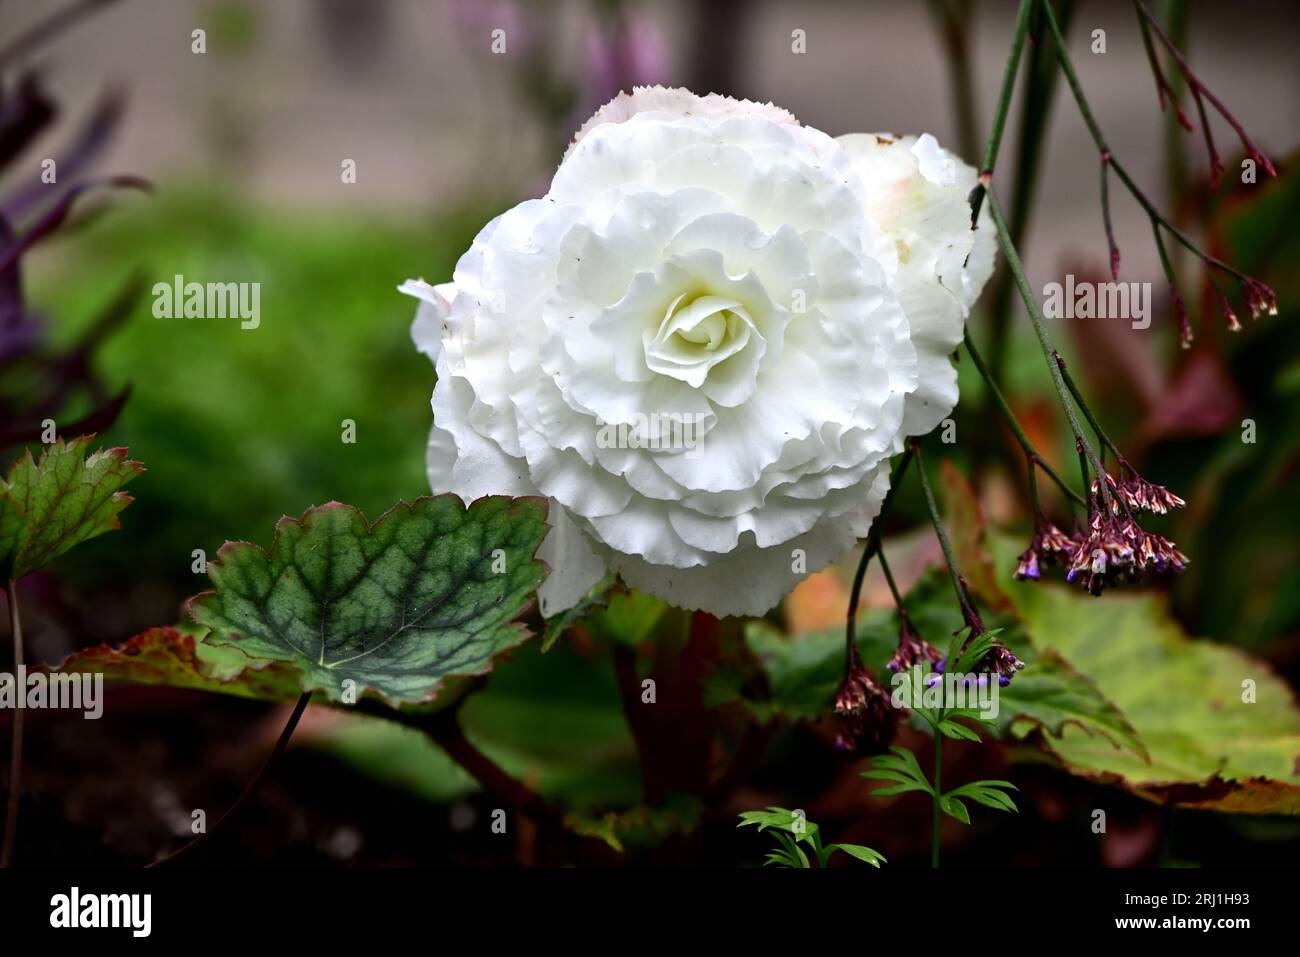 Around the UK - Single White Begonia flower Stock Photo